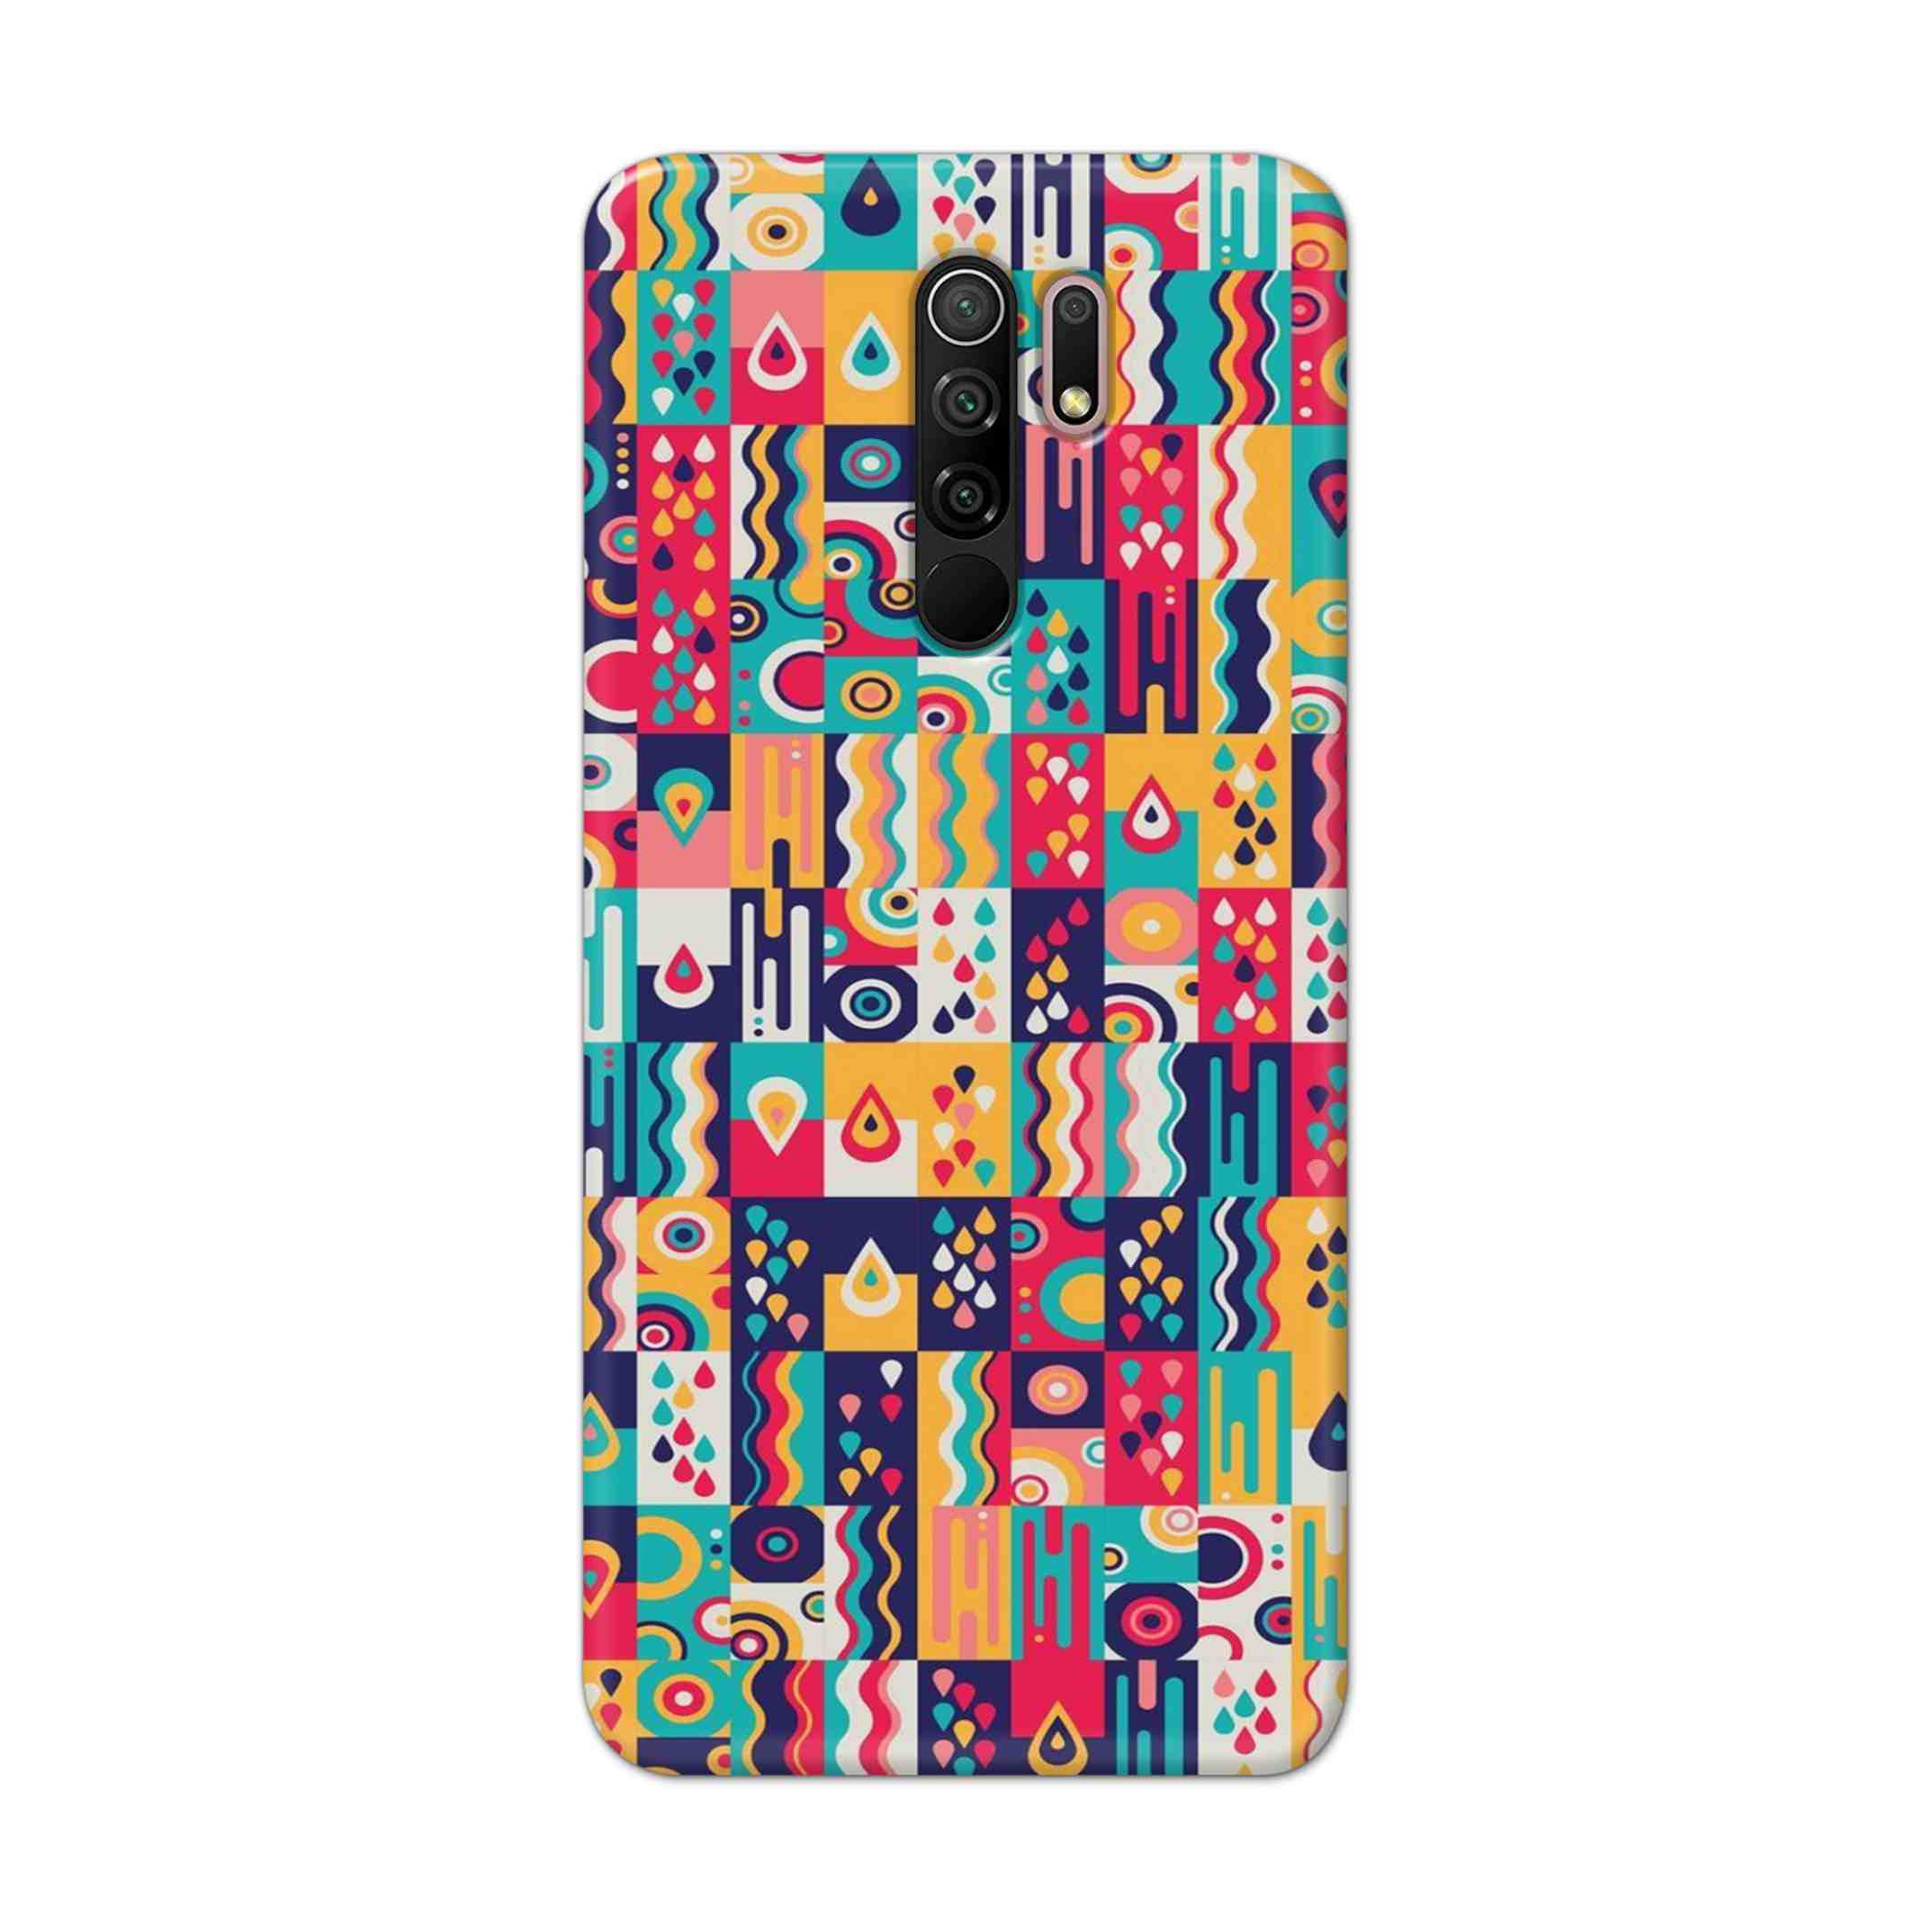 Buy Art Hard Back Mobile Phone Case Cover For Xiaomi Redmi 9 Prime Online